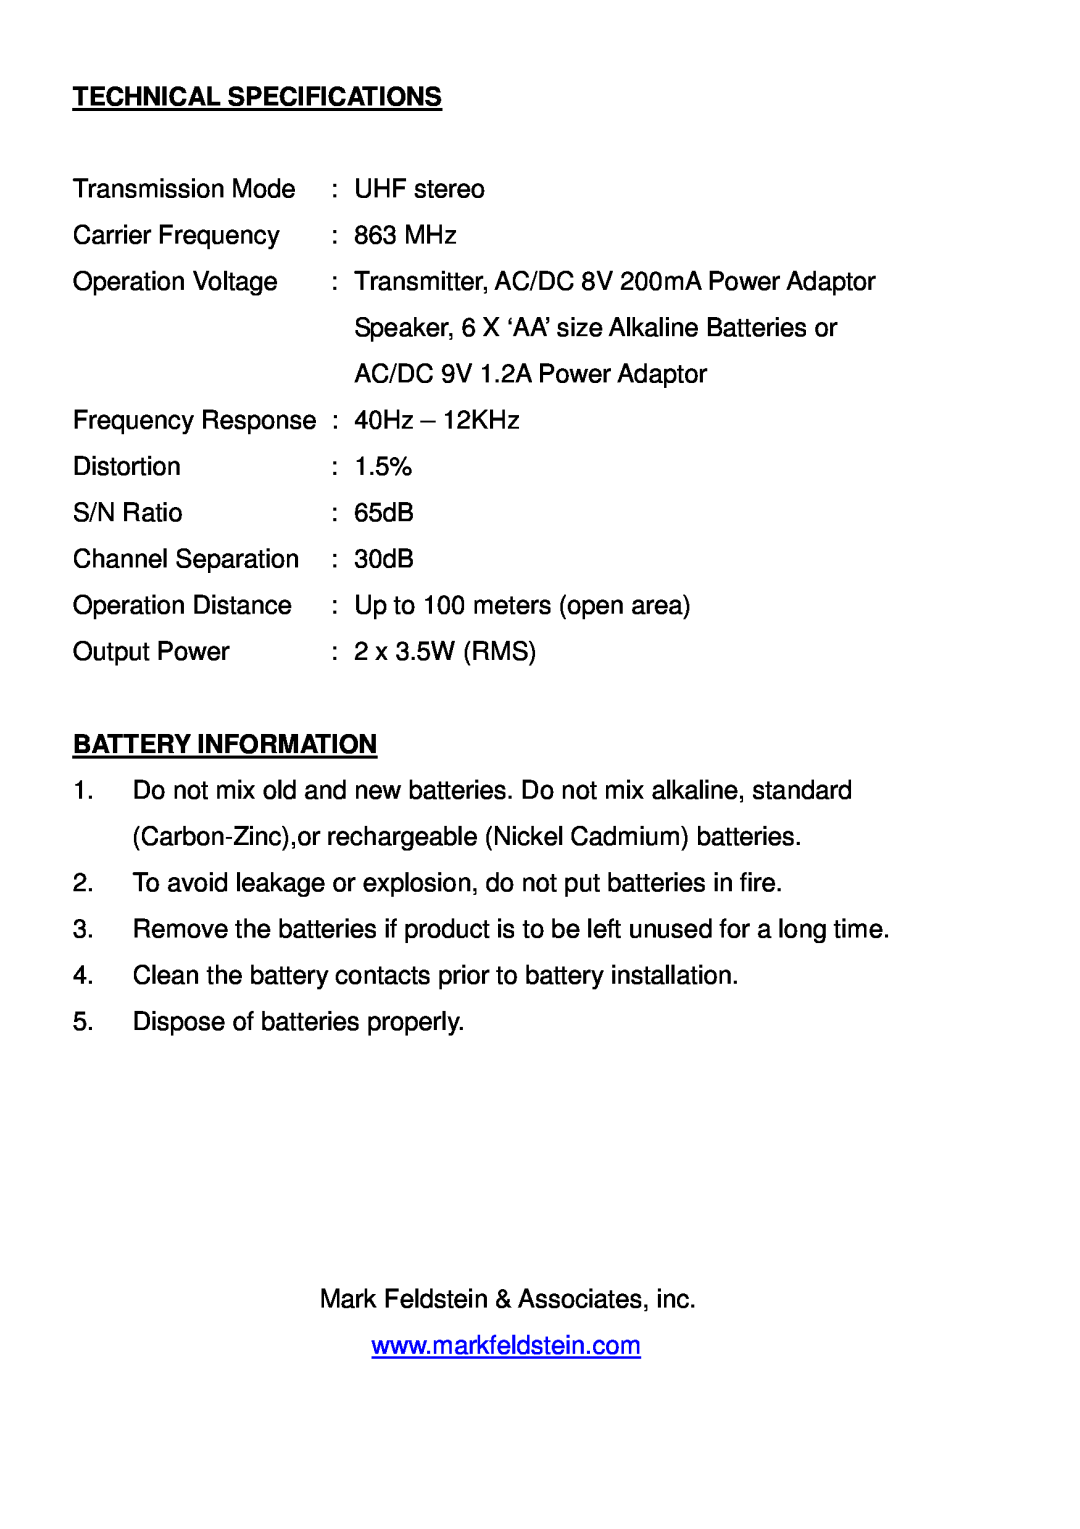 Mark Feldstein & Assoc SP4080 user manual Technical Specifications, Battery Information 